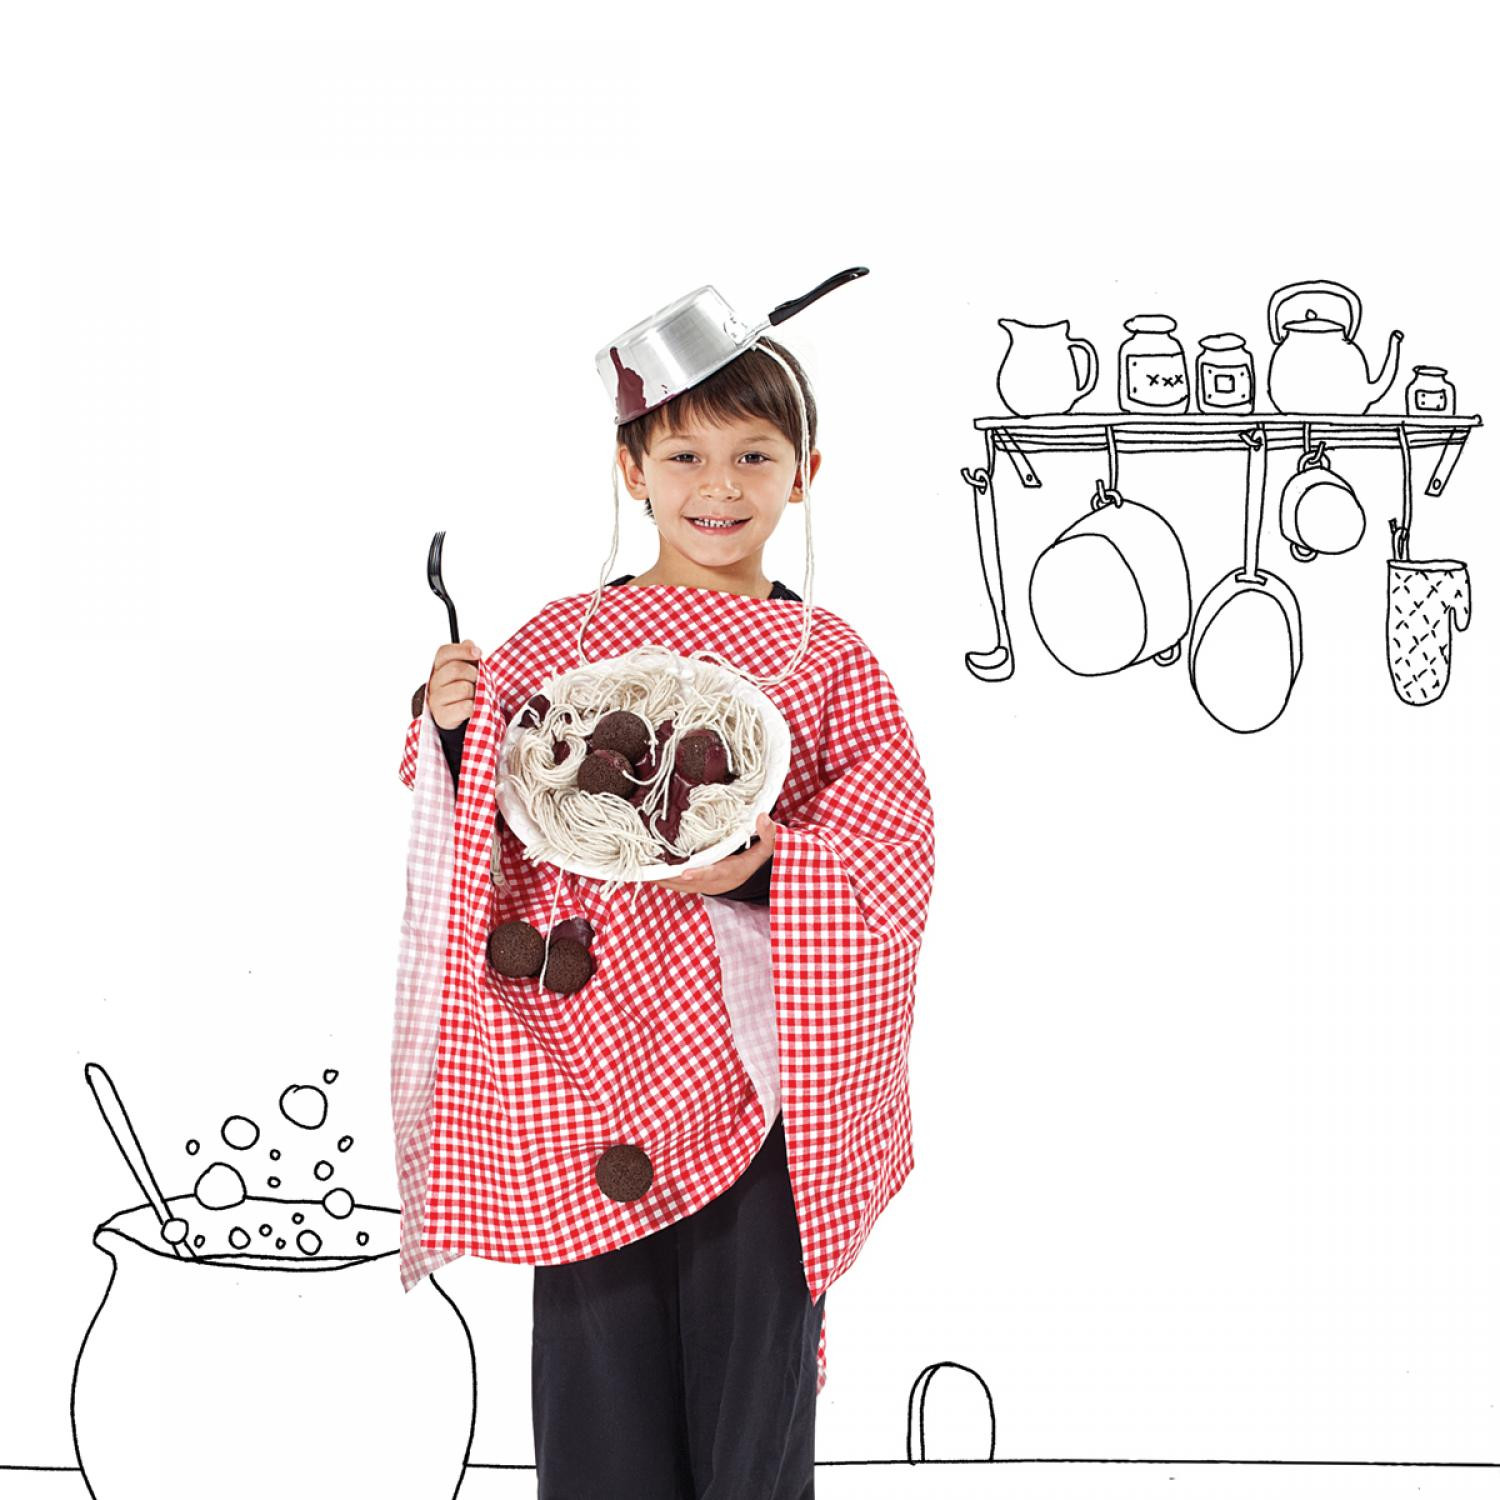 DIY Halloween Costume Ideas For Kids
 35 Easy Homemade Halloween Costumes for Kids